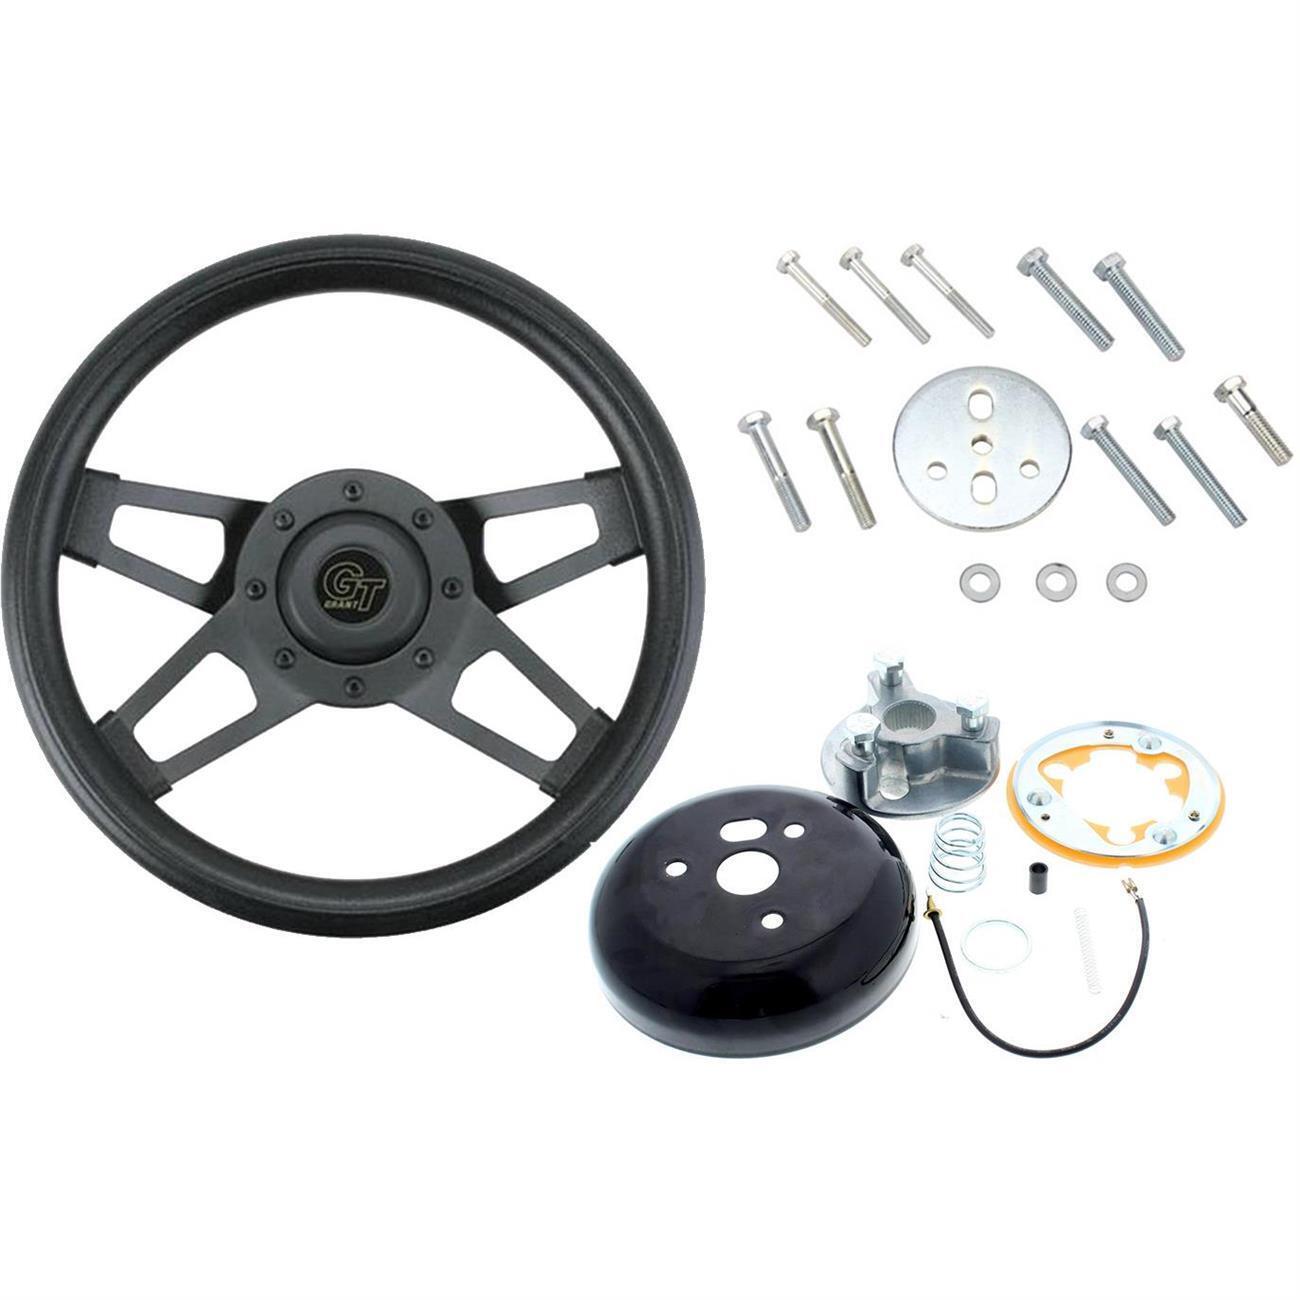 Grant 414 Challenger GT Steering Wheel, 13-1/2 Inch w/Install Kit